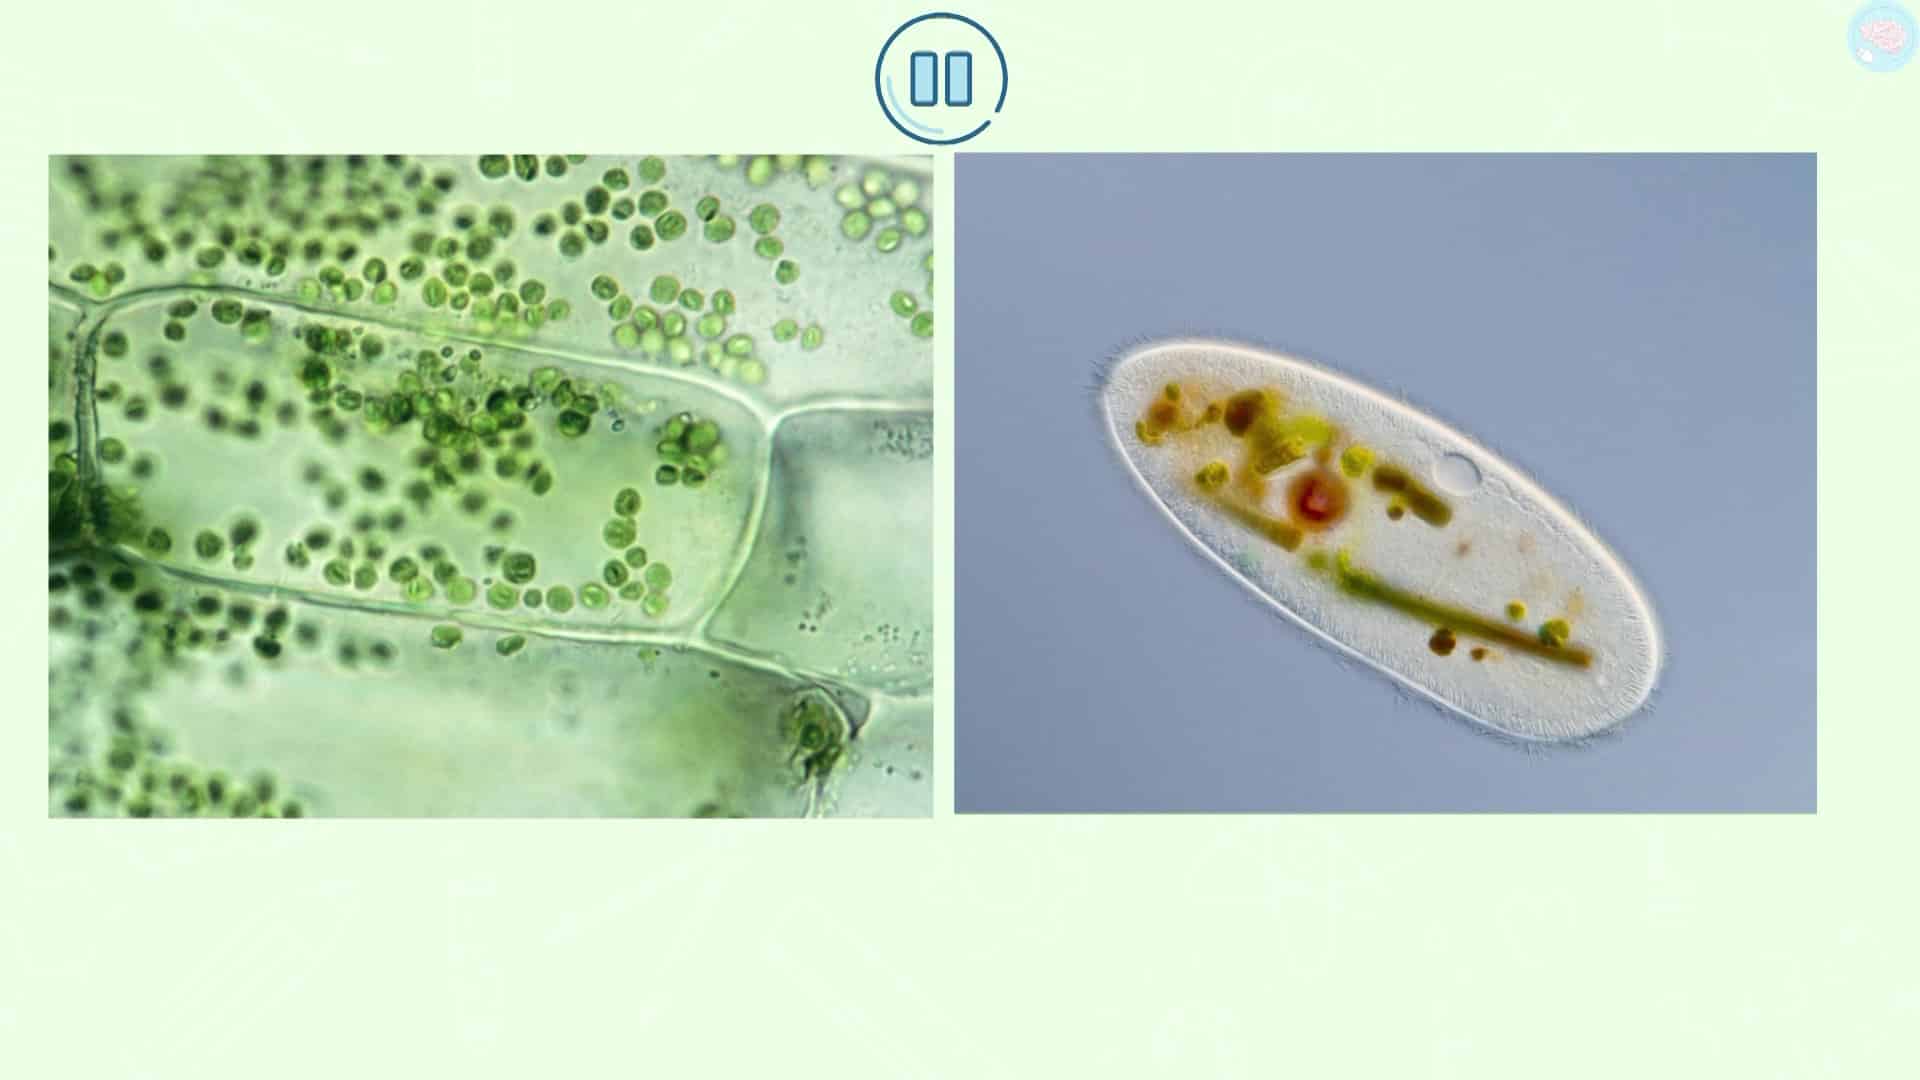 unicellulaire ou pluricellulaire ?